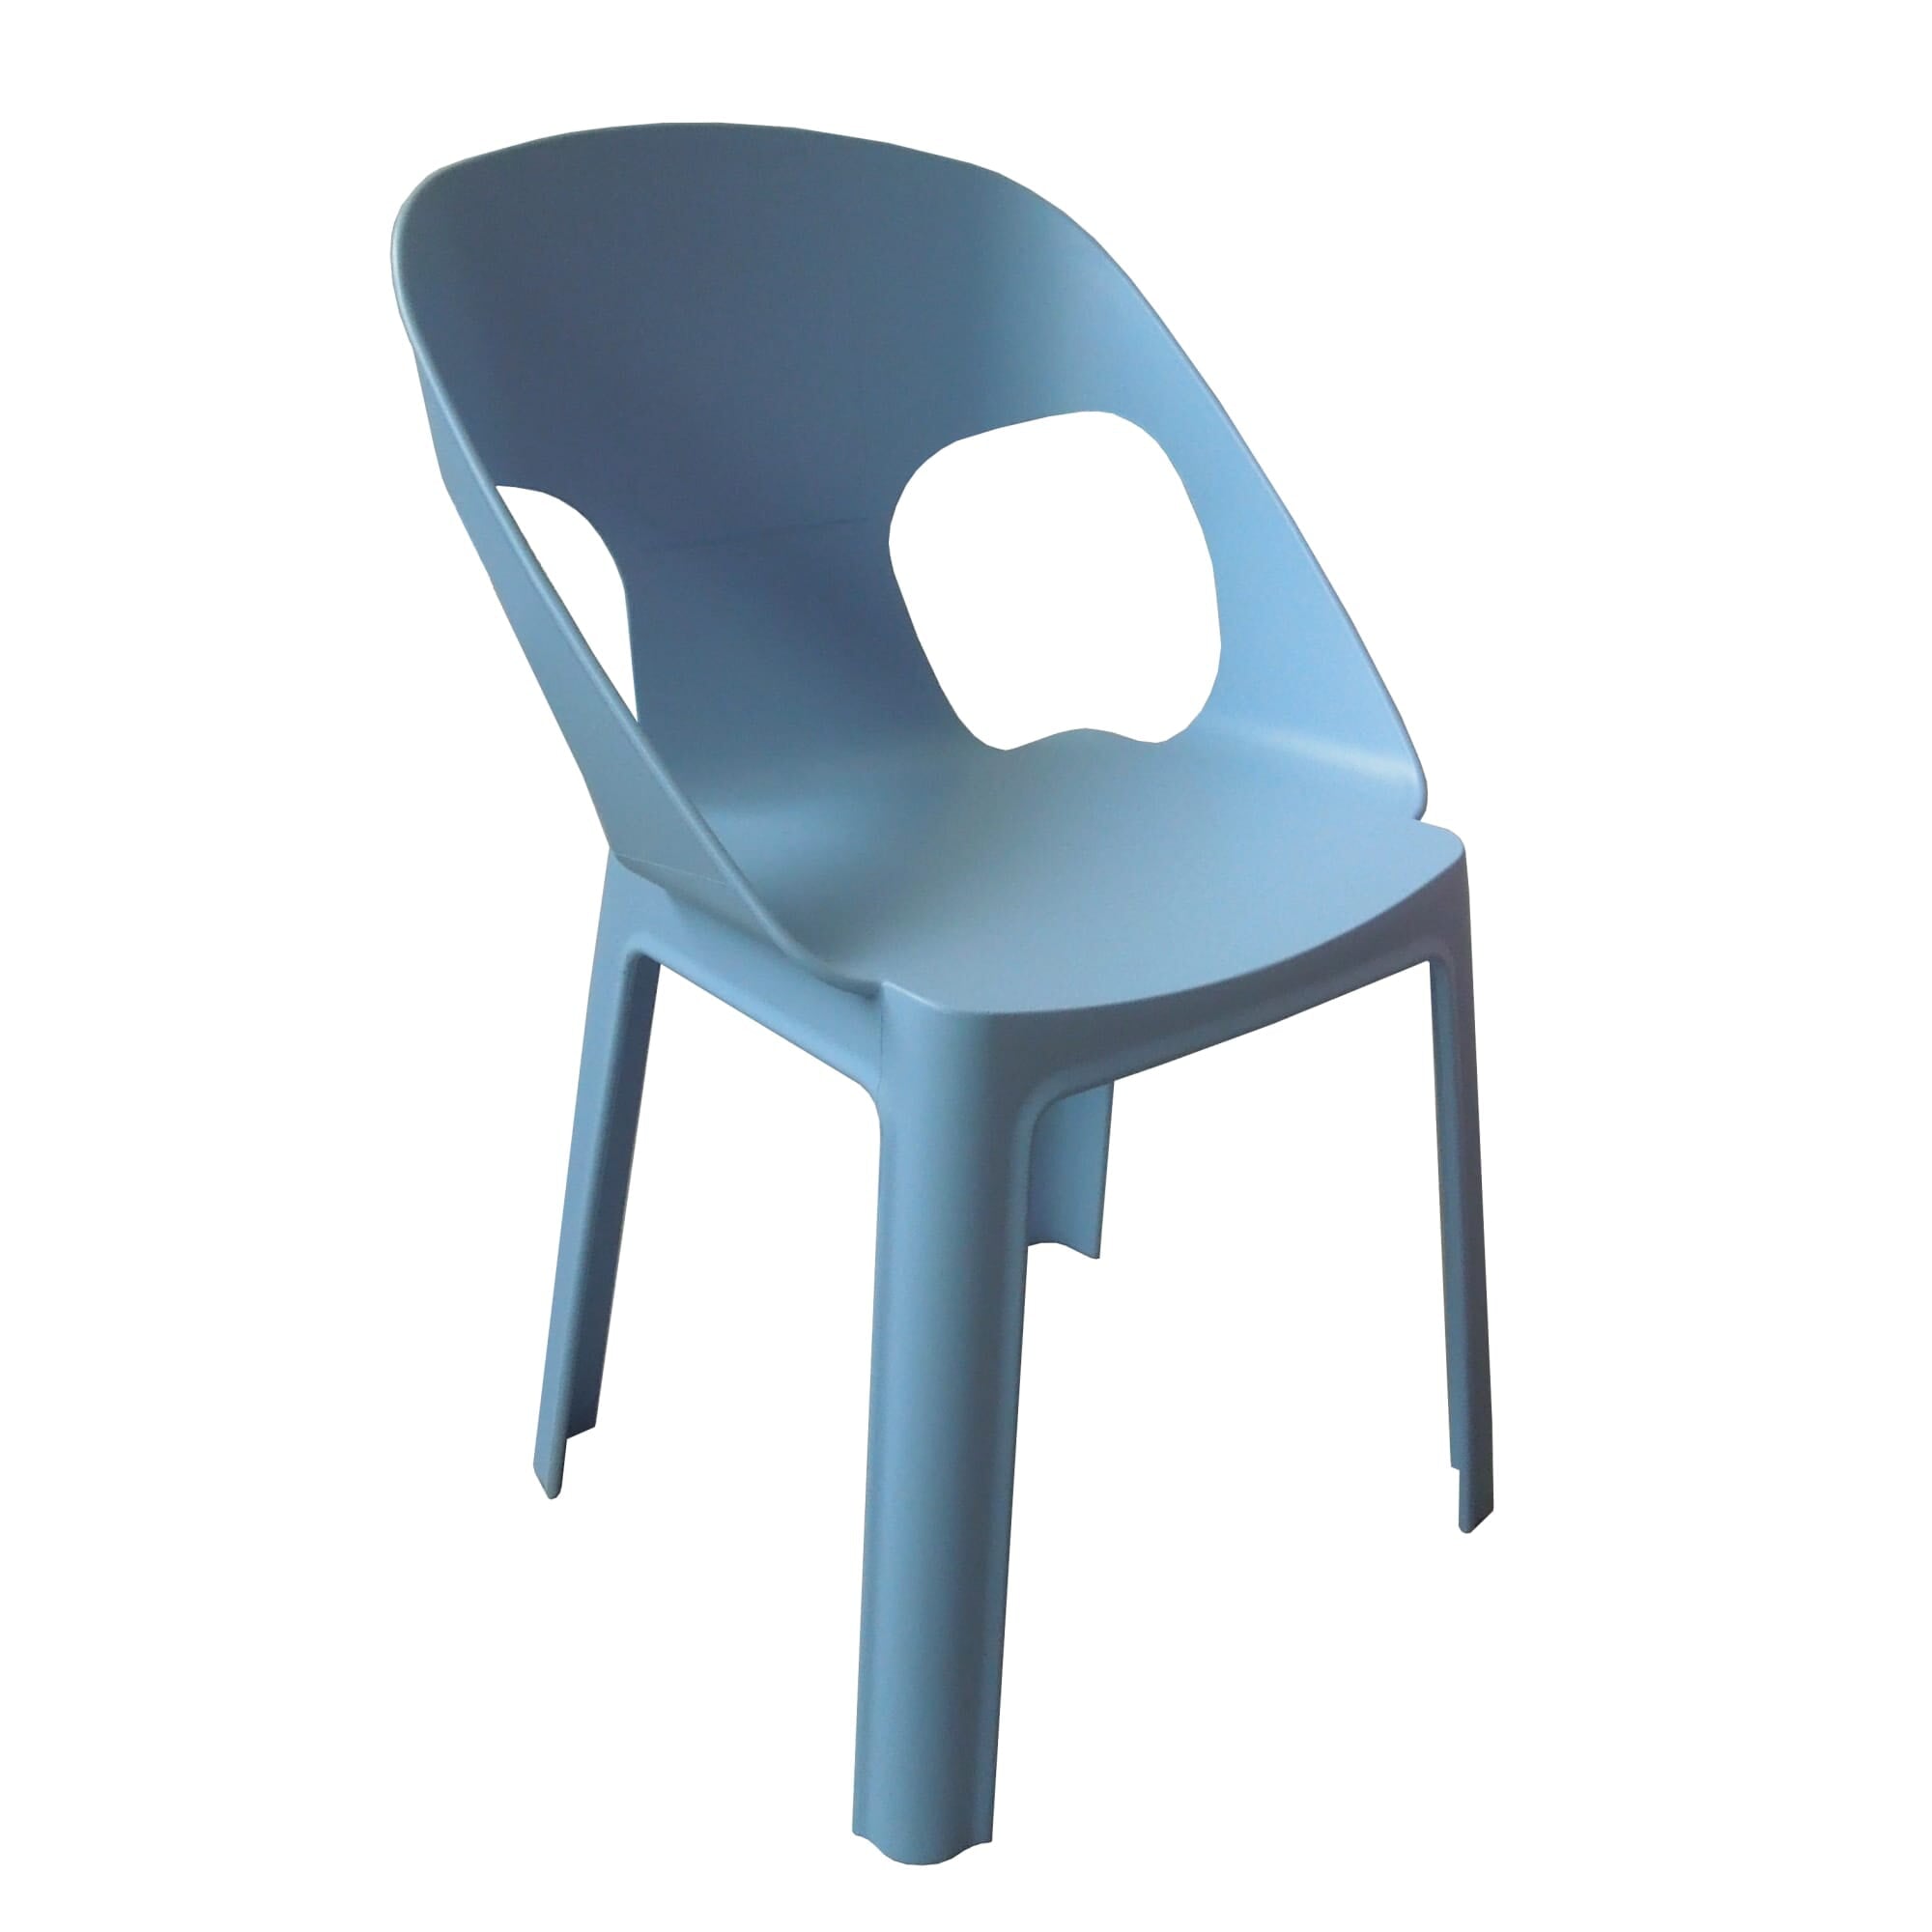 Garbar Rita high chair indoors, outdoor blue blue